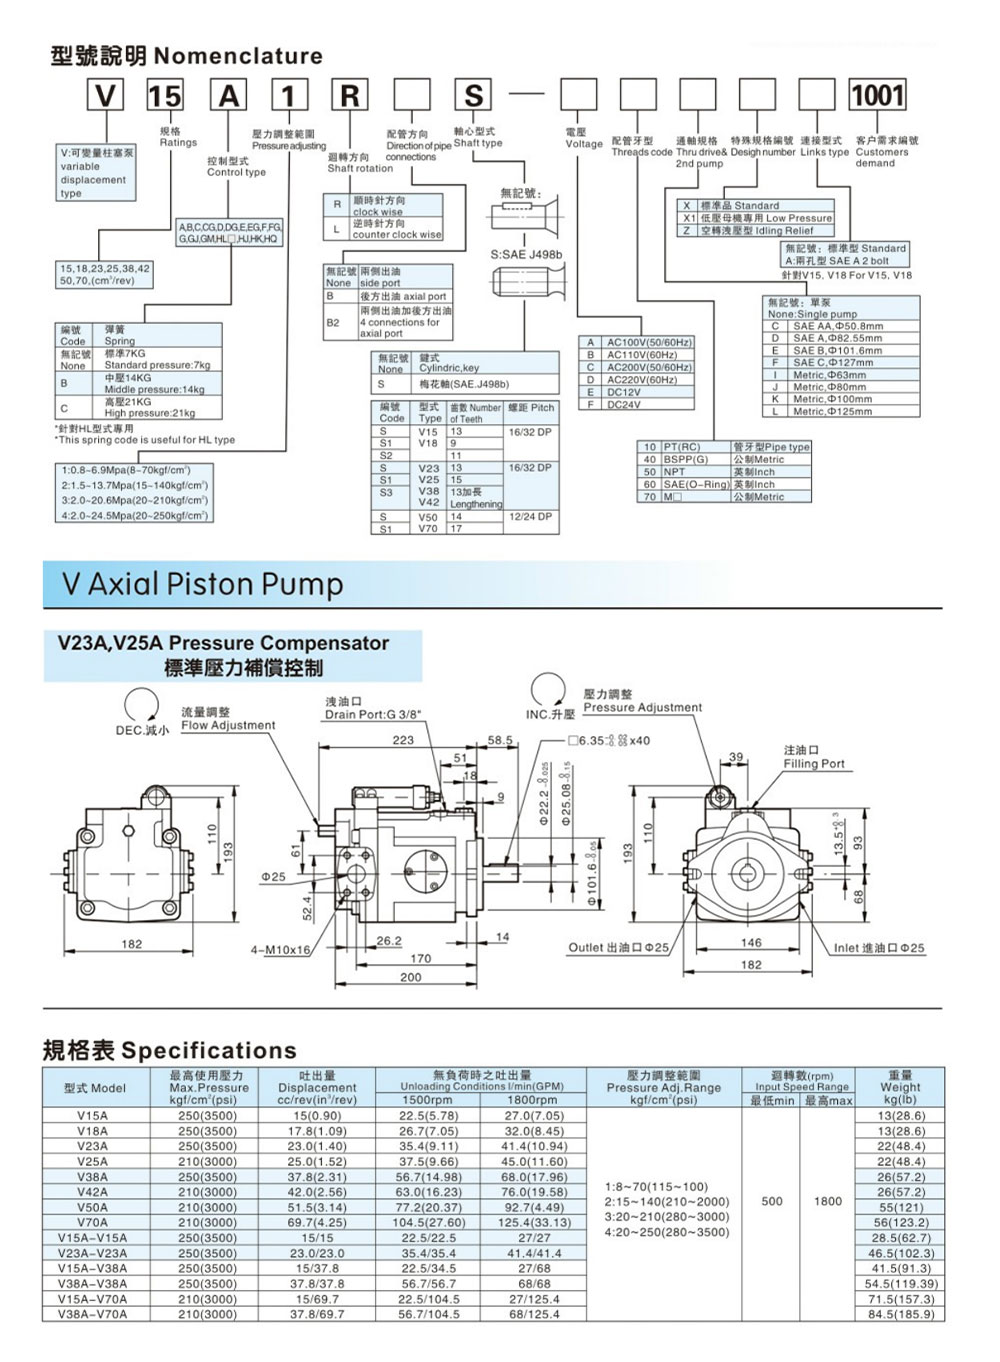 YISHG Type V38A3RX Piston Pump